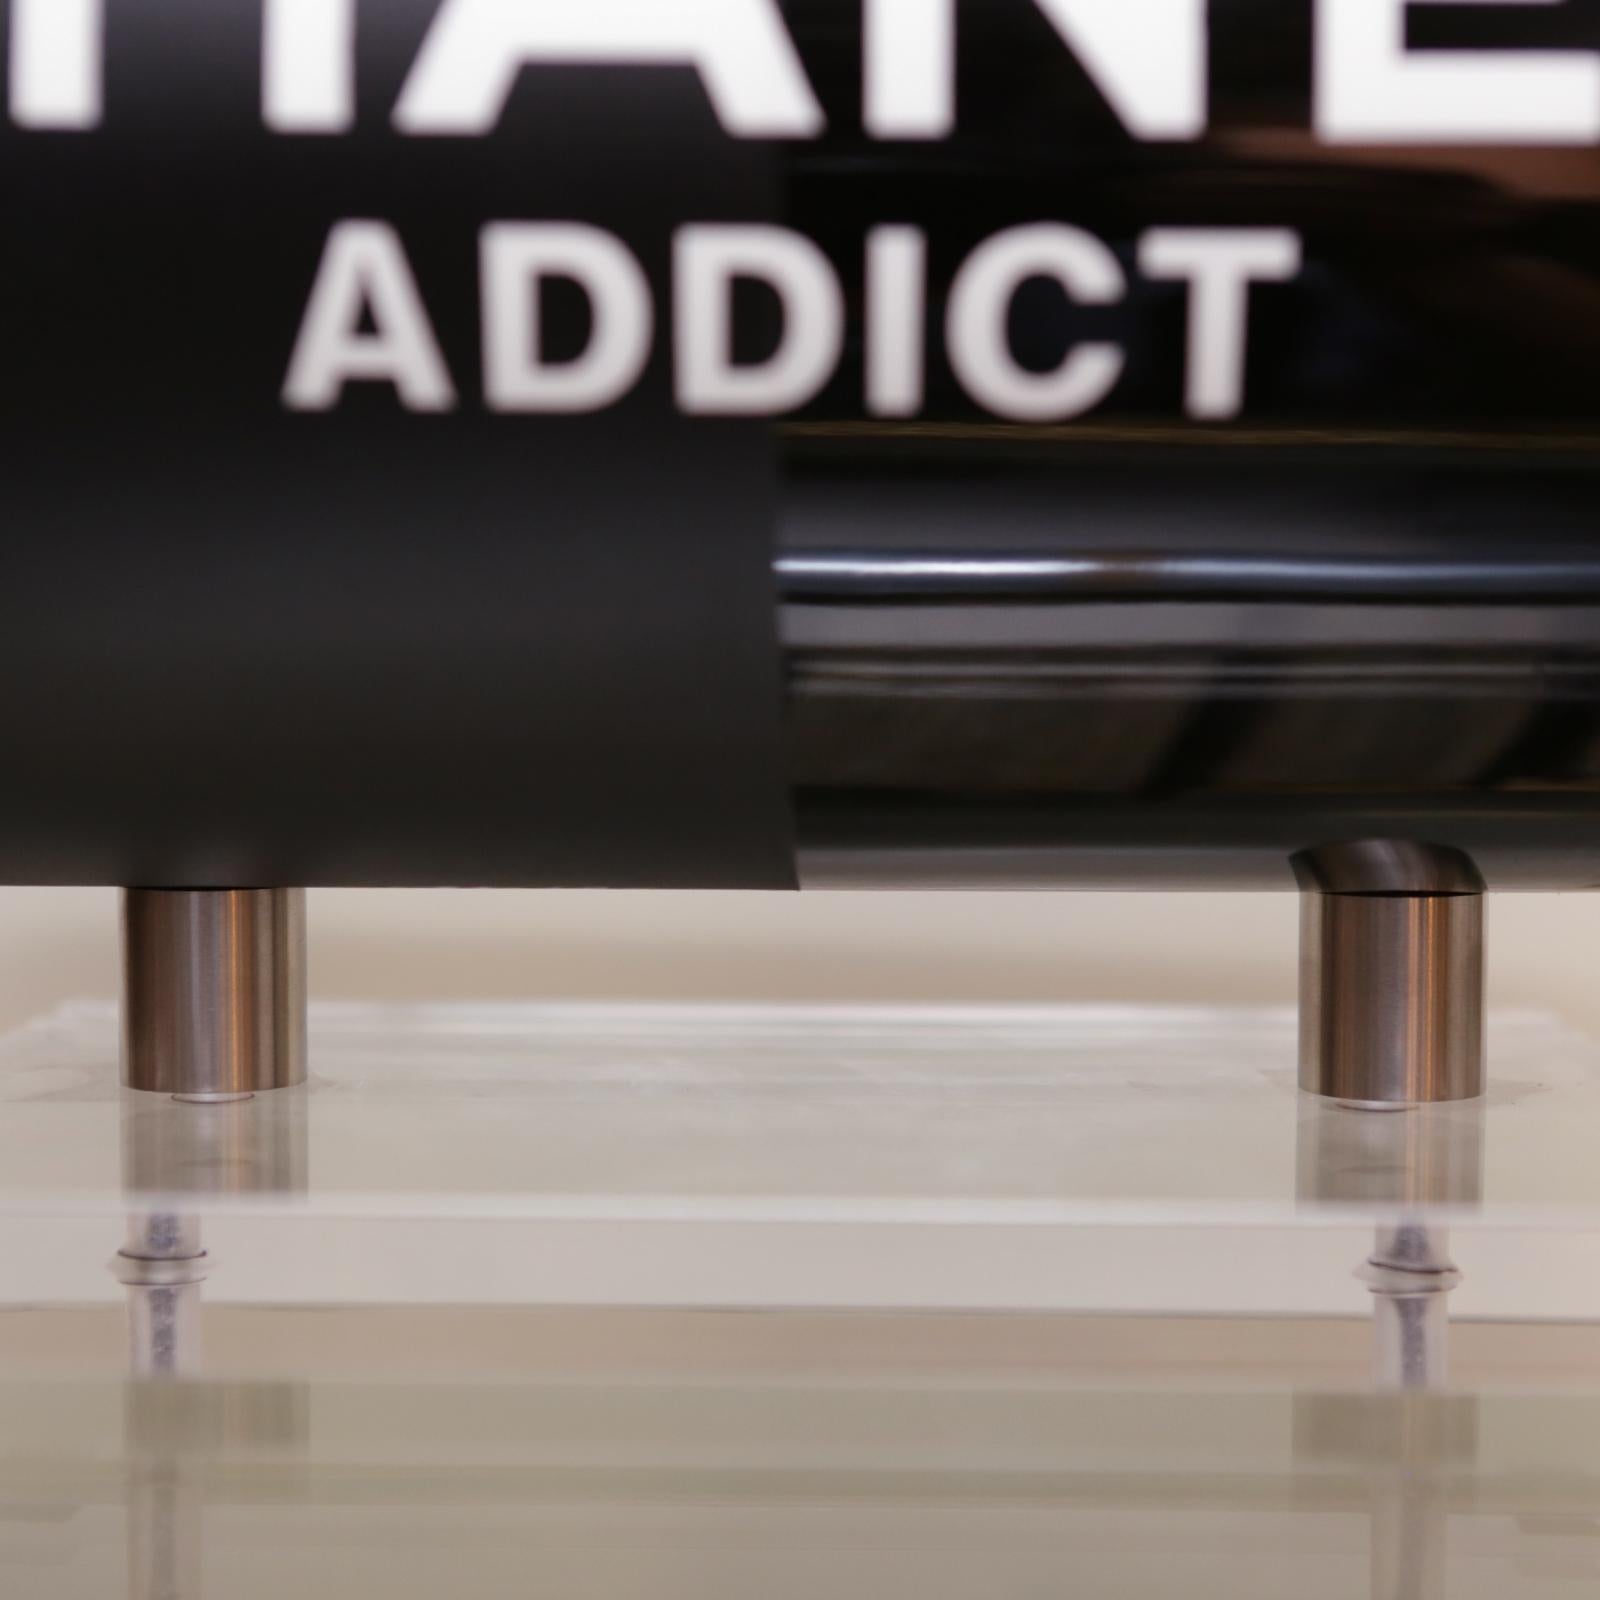 Dutch Pill Chanel Addict Black Sculpture